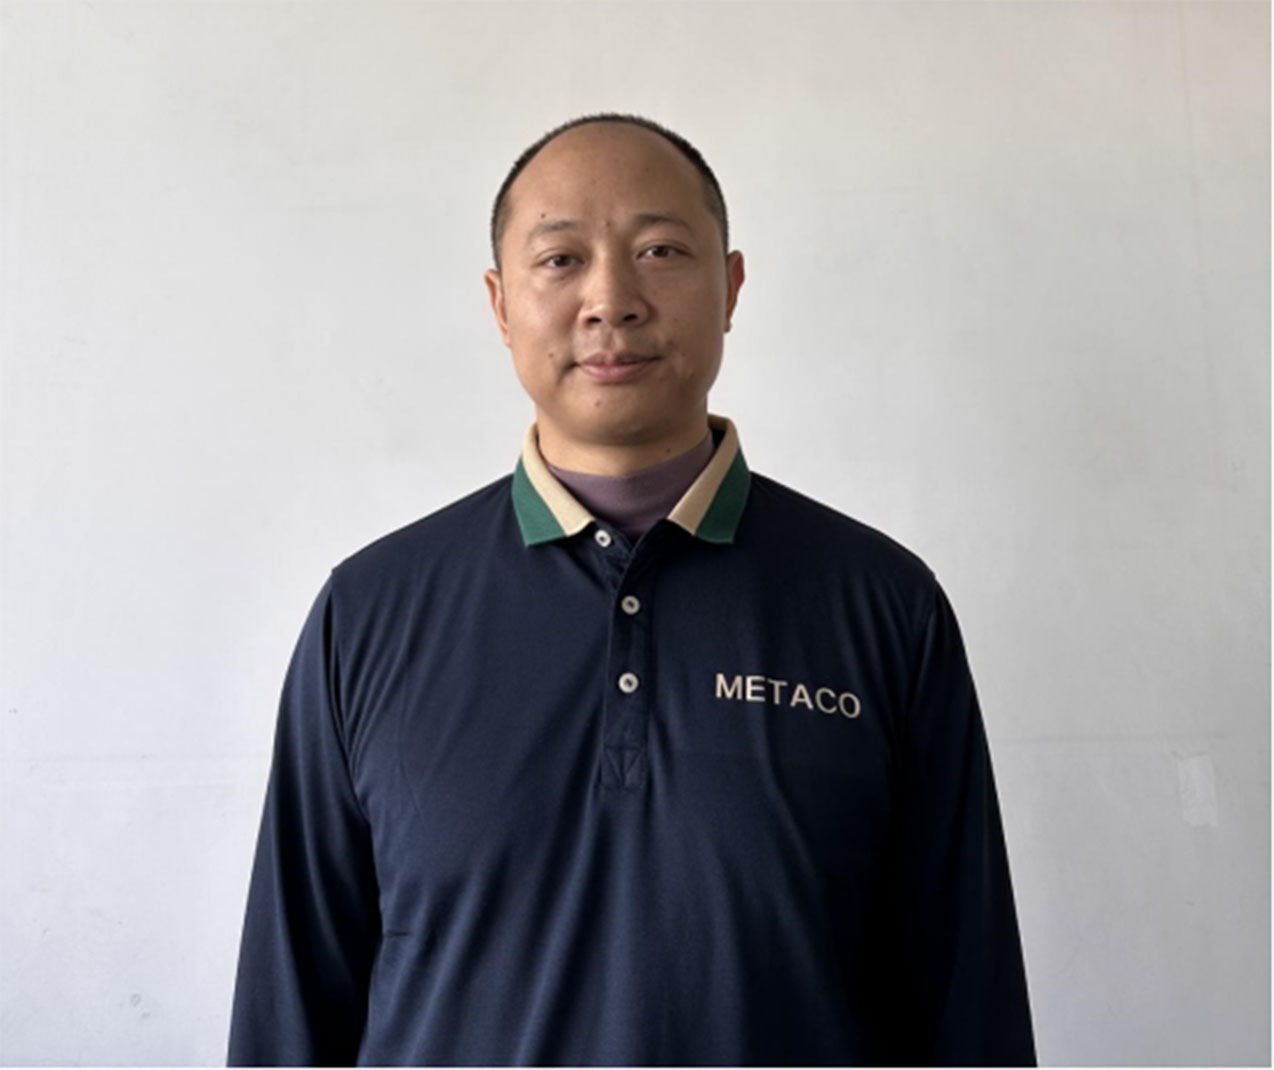 Metaco founder Lyman Wang